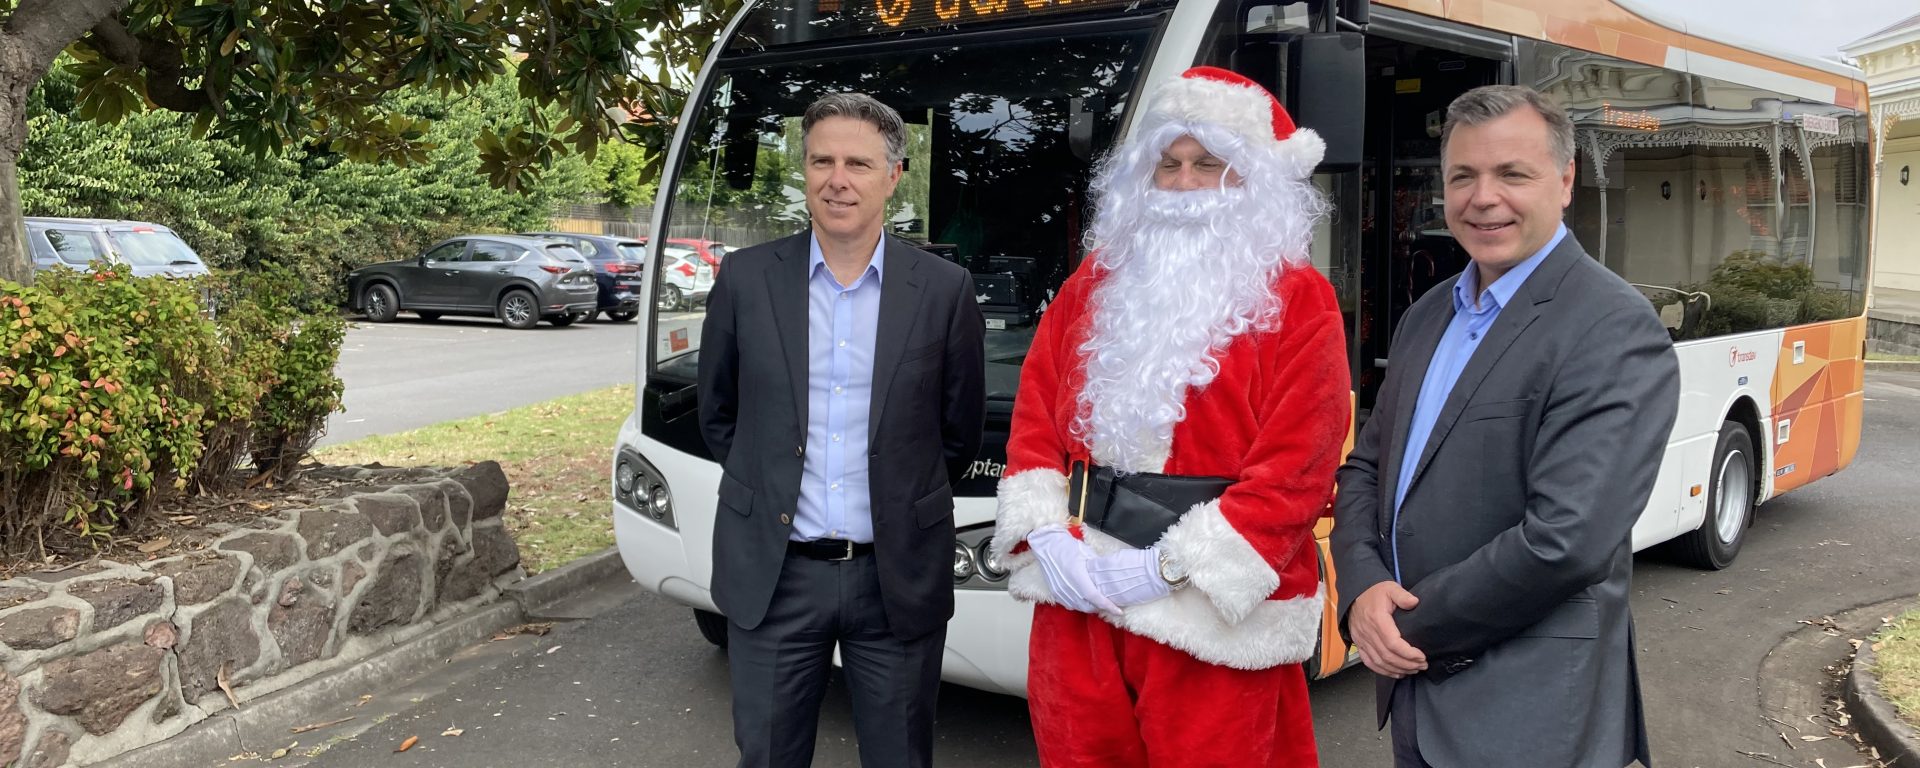 Transdev Melbourne Santa bus